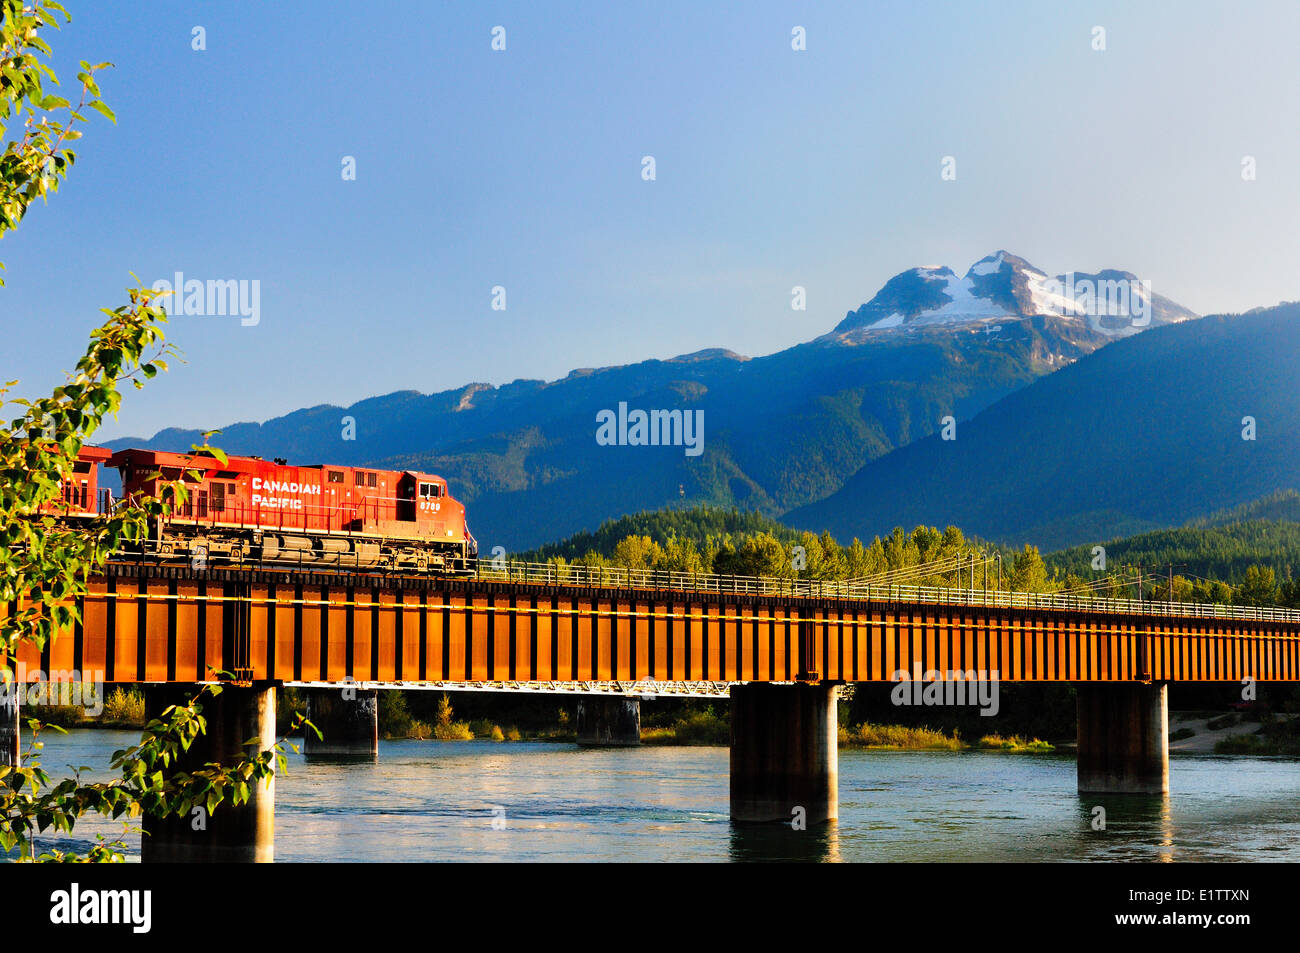 A Canadian Pacific Rail locomotive crosses the rail bridge over the Columbia River in Revelstoke, BC Stock Photo